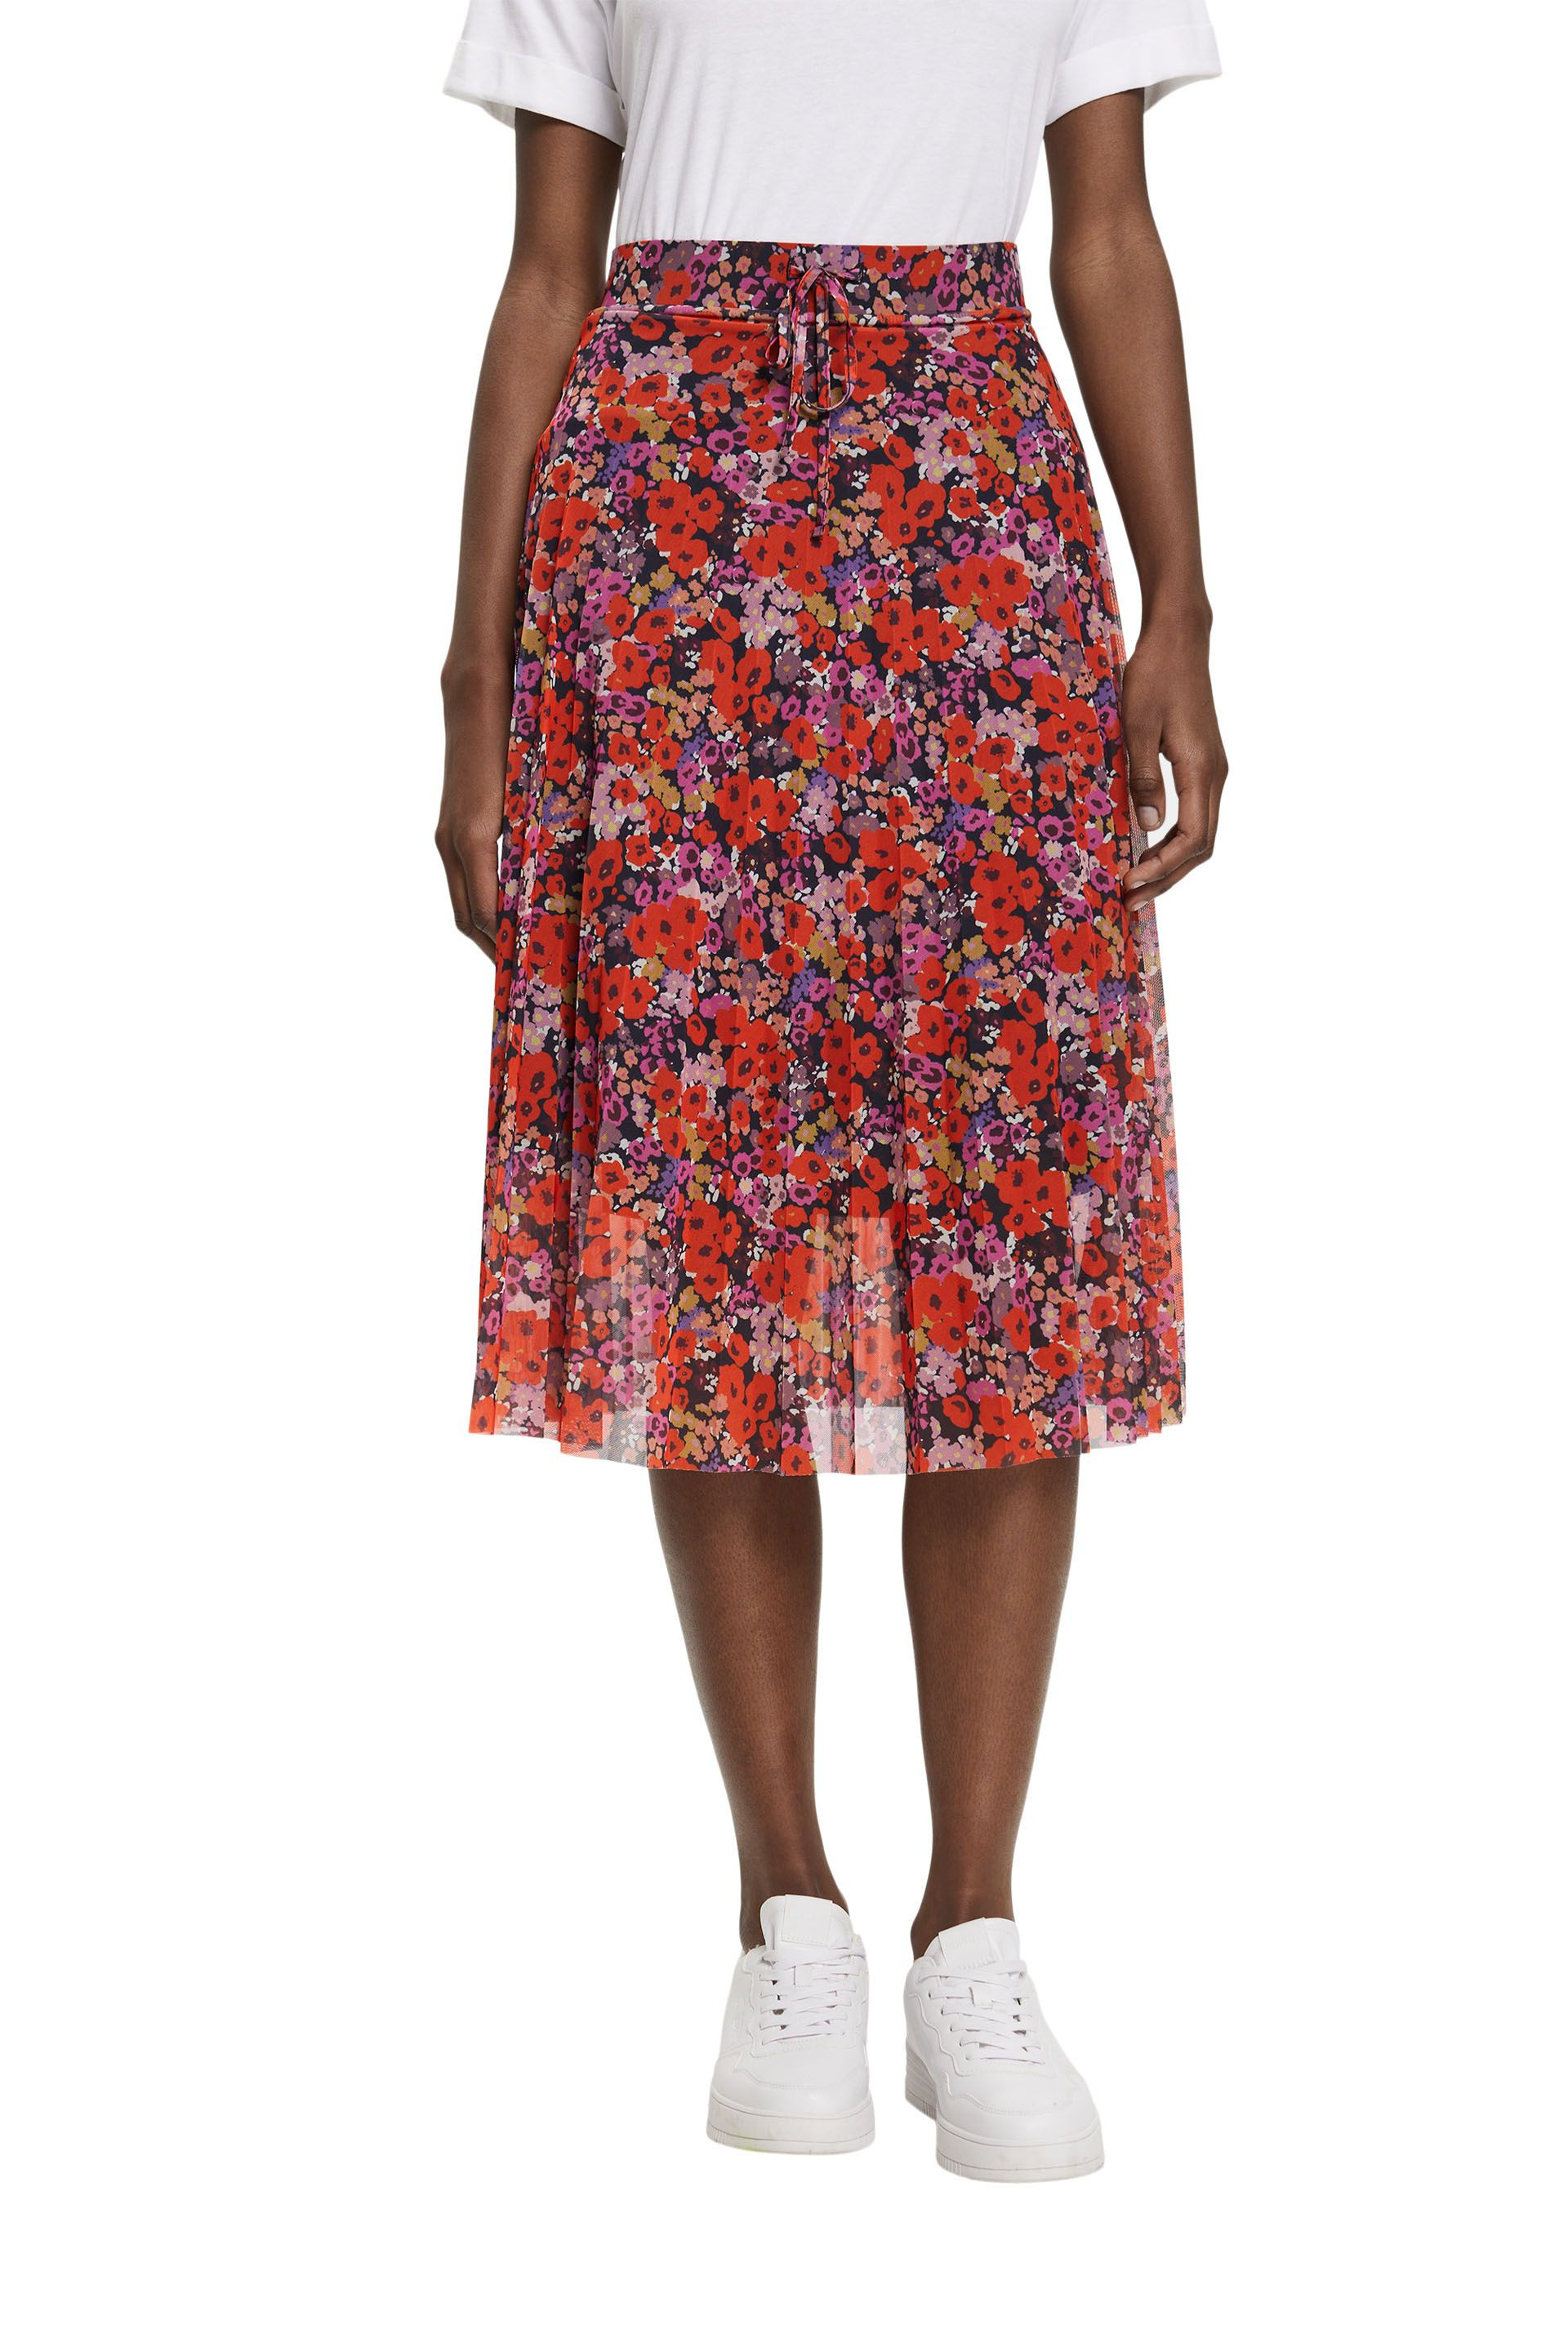 Esprit - Floral pleated skirt, Multicolor, large image number 2